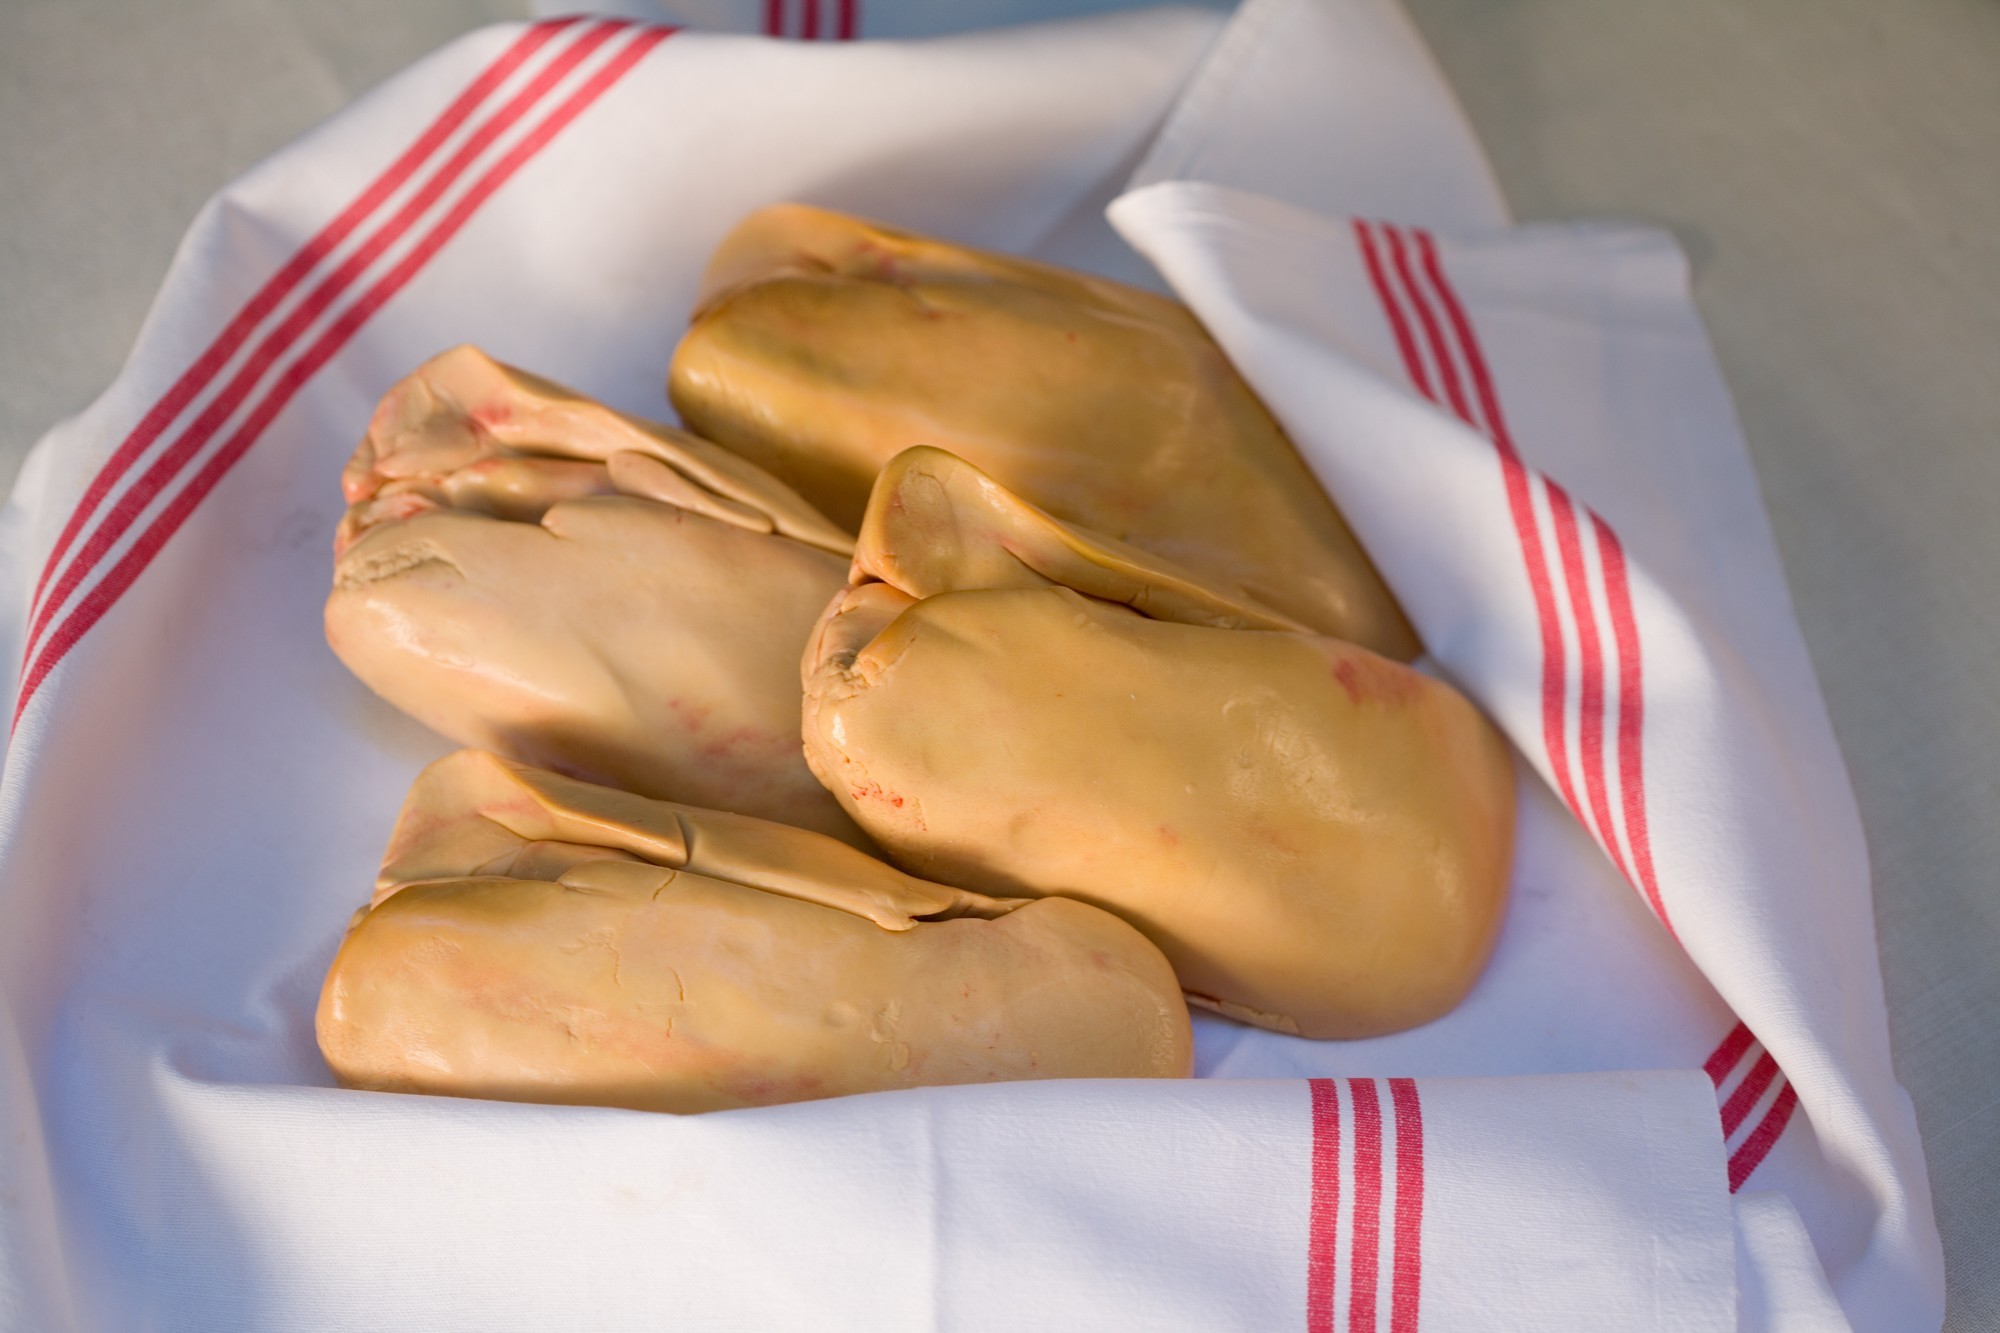 Foie gras de canard cru extra IGP Sud-Ouest - 500g